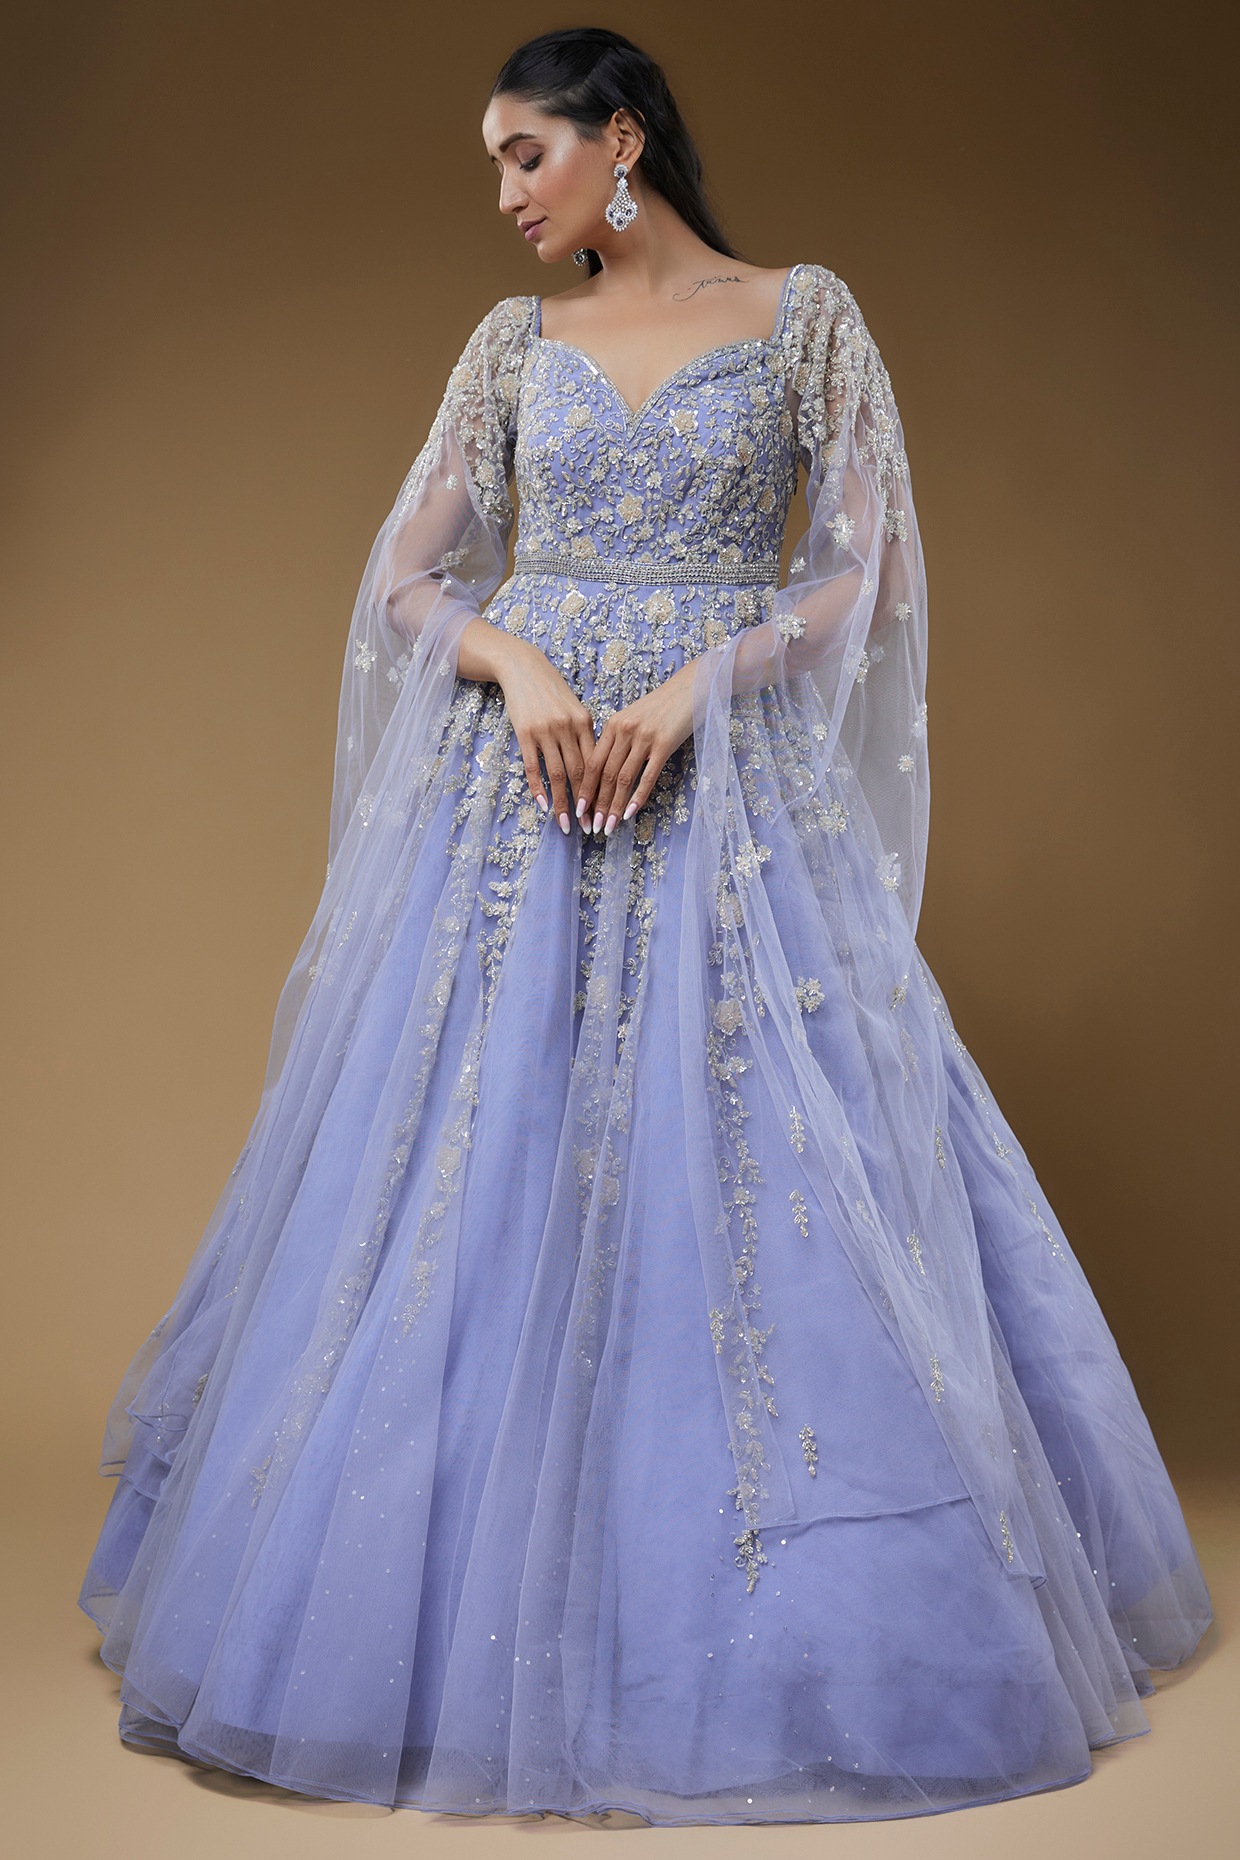 Blue Floral Brocade Renaissance Gothic Victorian Dress Gown